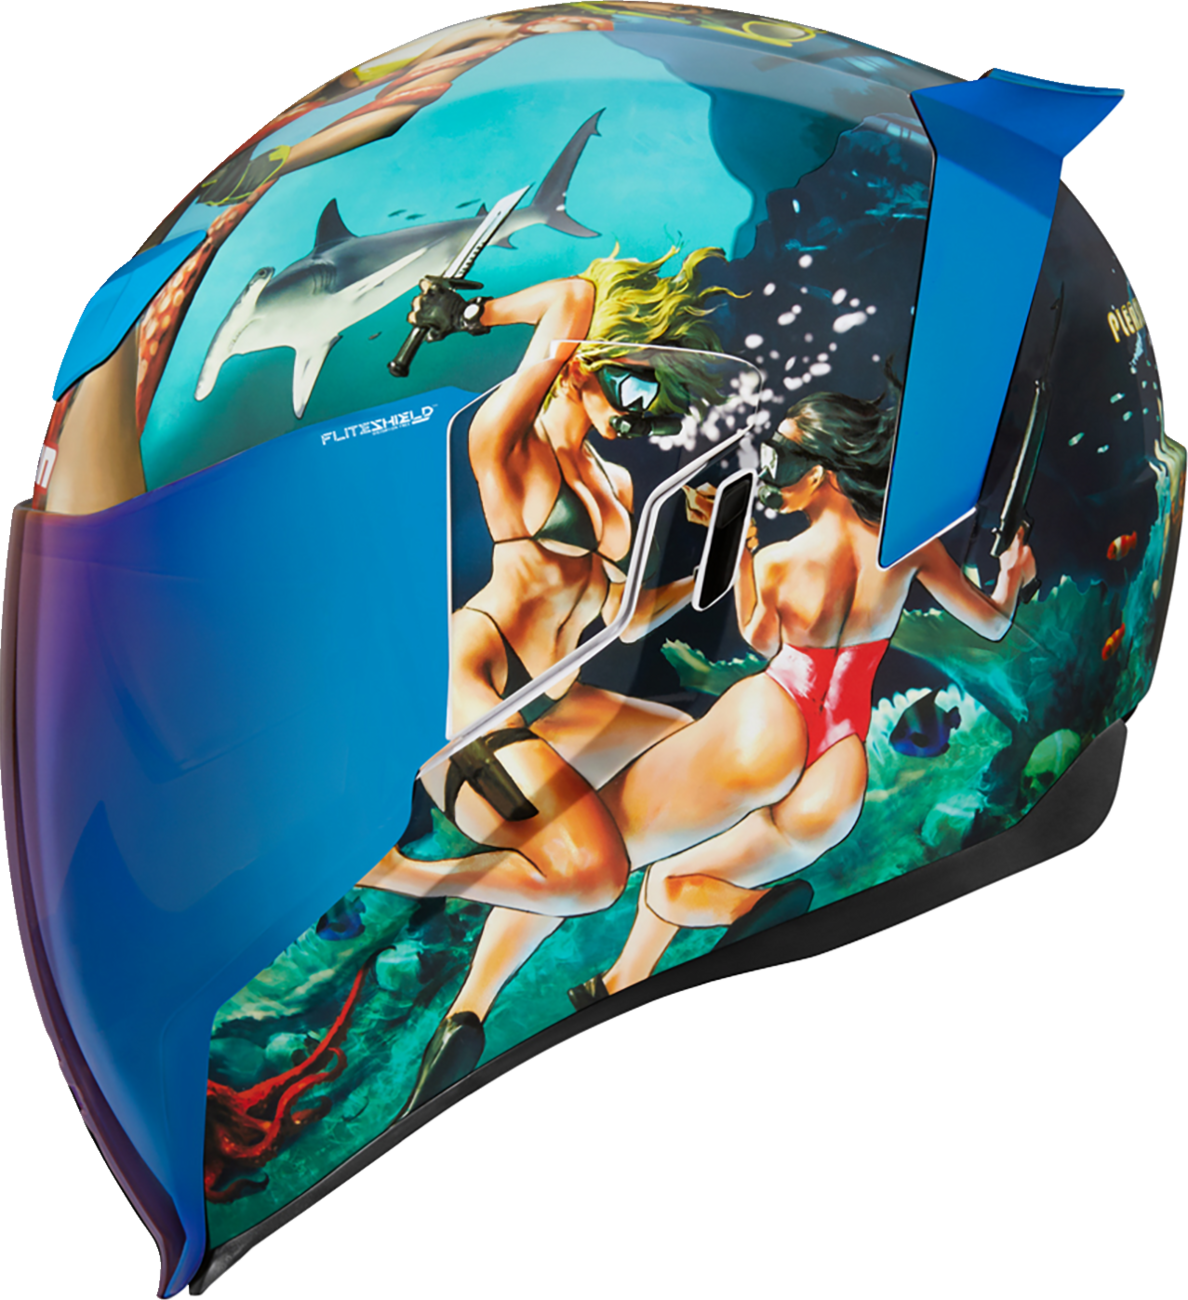 ICON Airflite™ Helmet - Pleasuredome4 - Blue - Medium 0101-15002